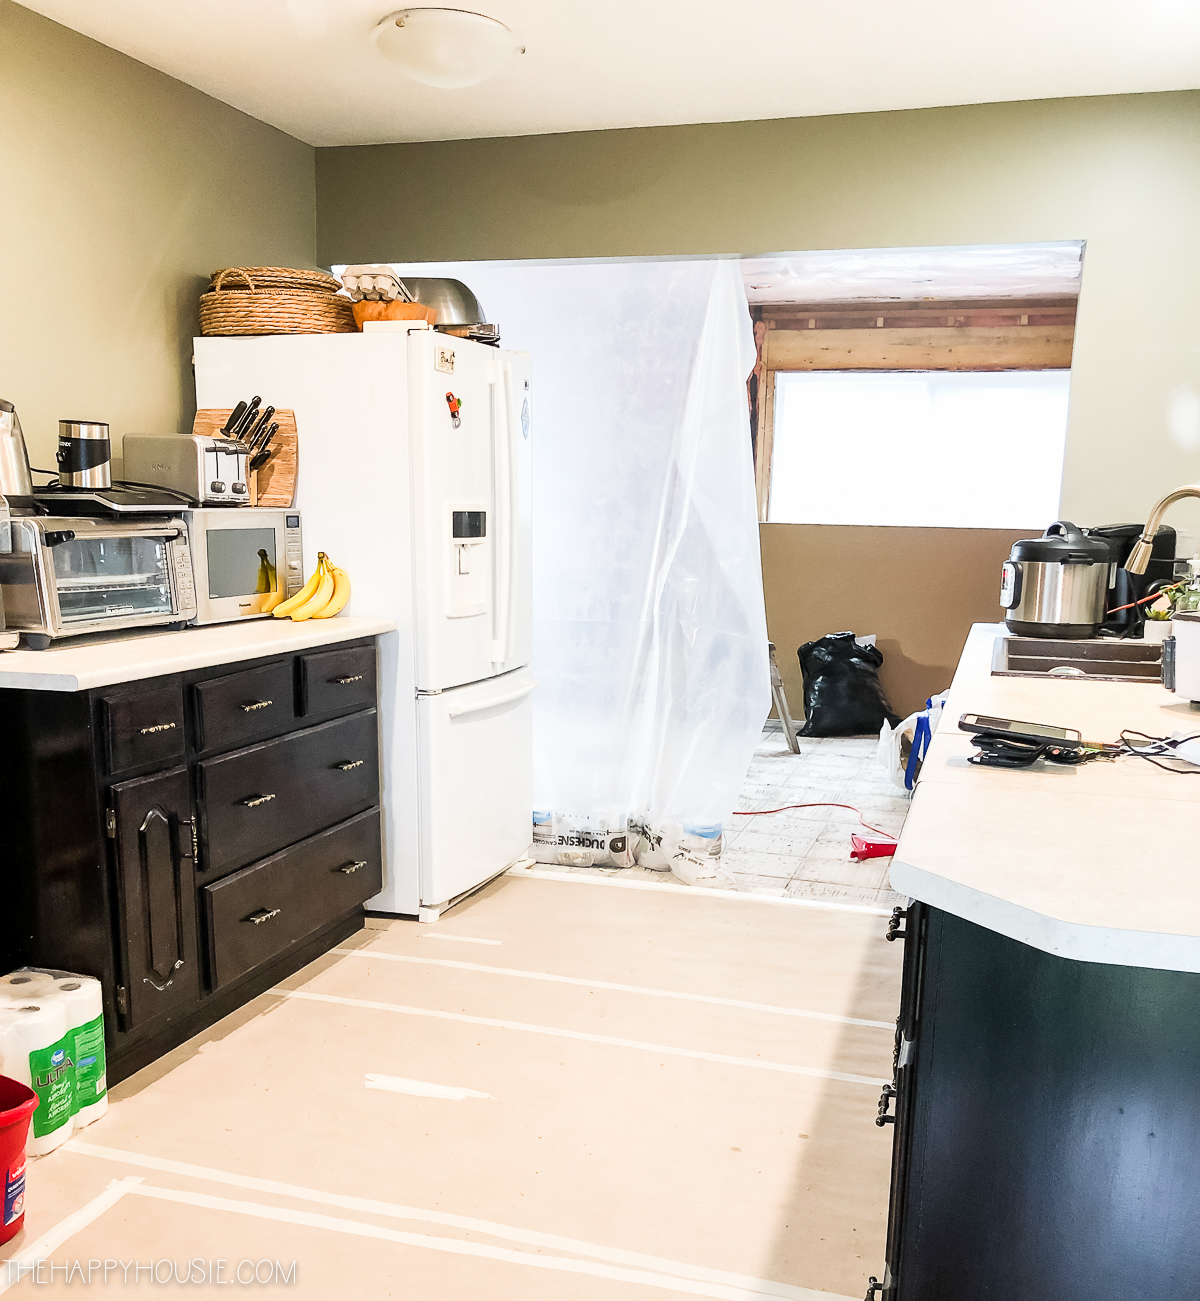 kitchen renovation in progress